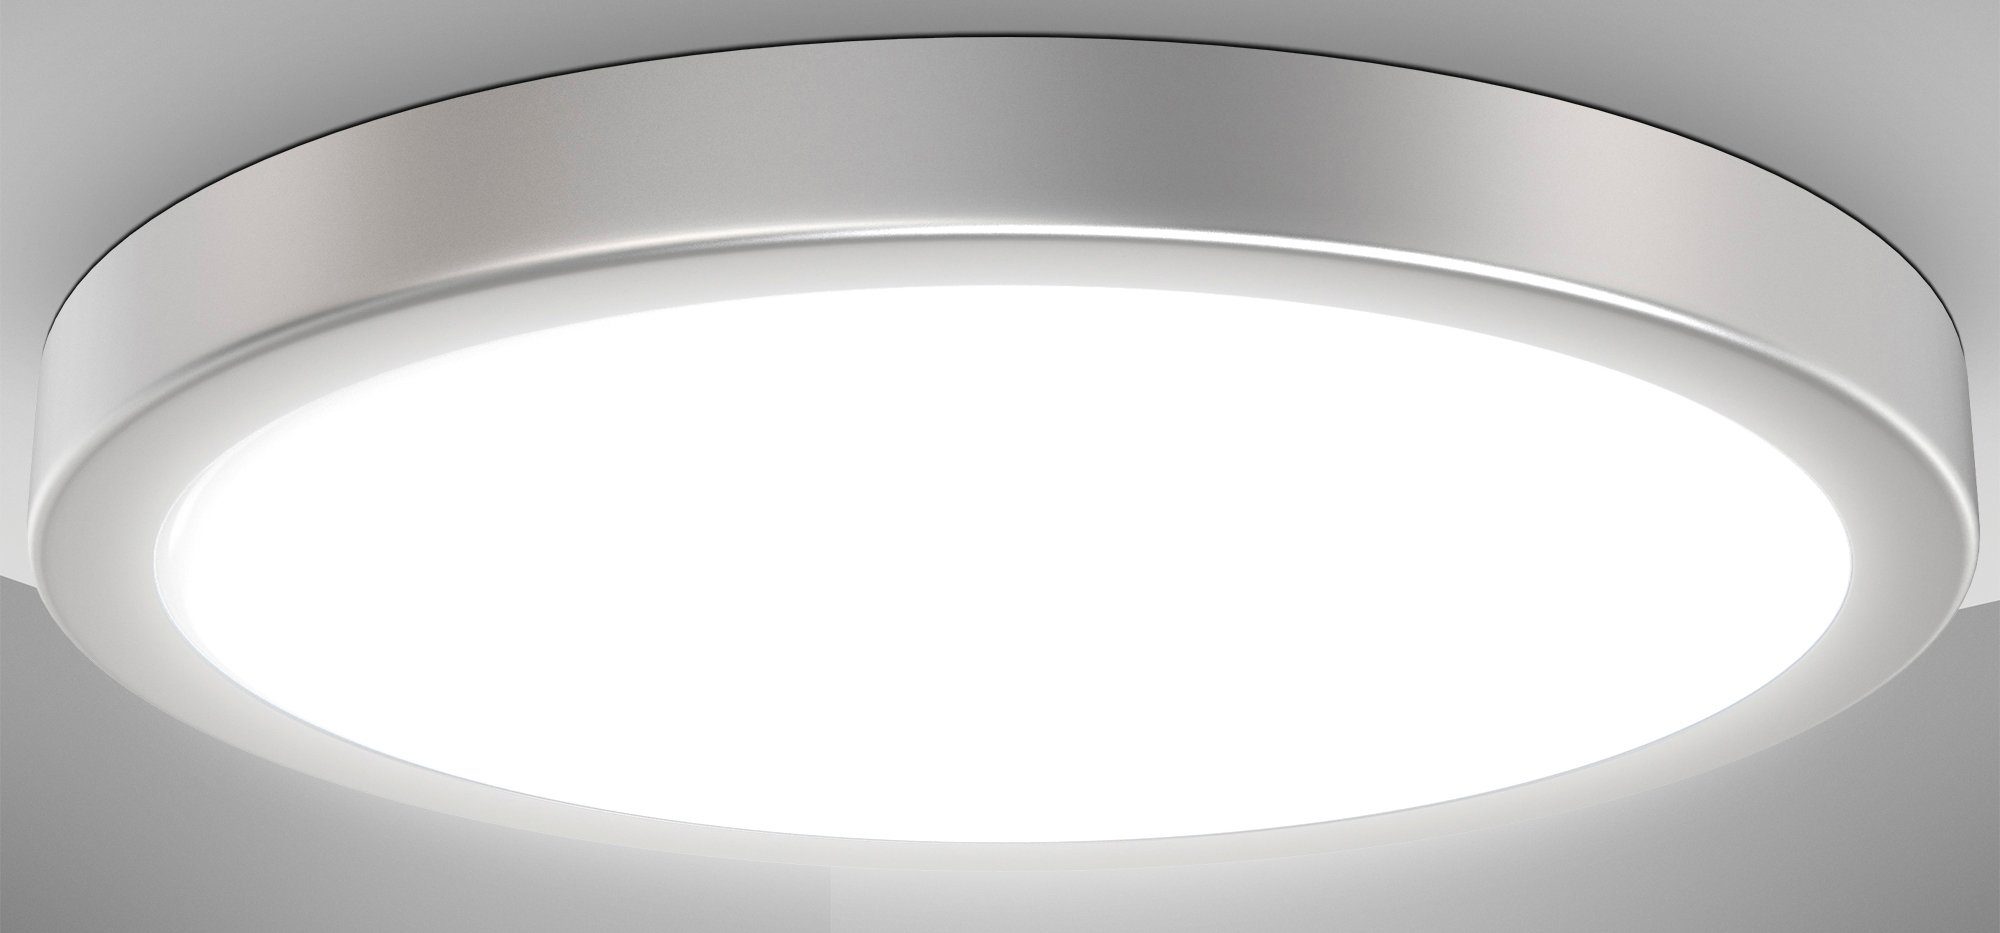 B.K.Licht Led-plafondlamp BK_DL1537 LED Deckenlampe, Ø38cm, Neutralweißes Licht, Silberfarbig